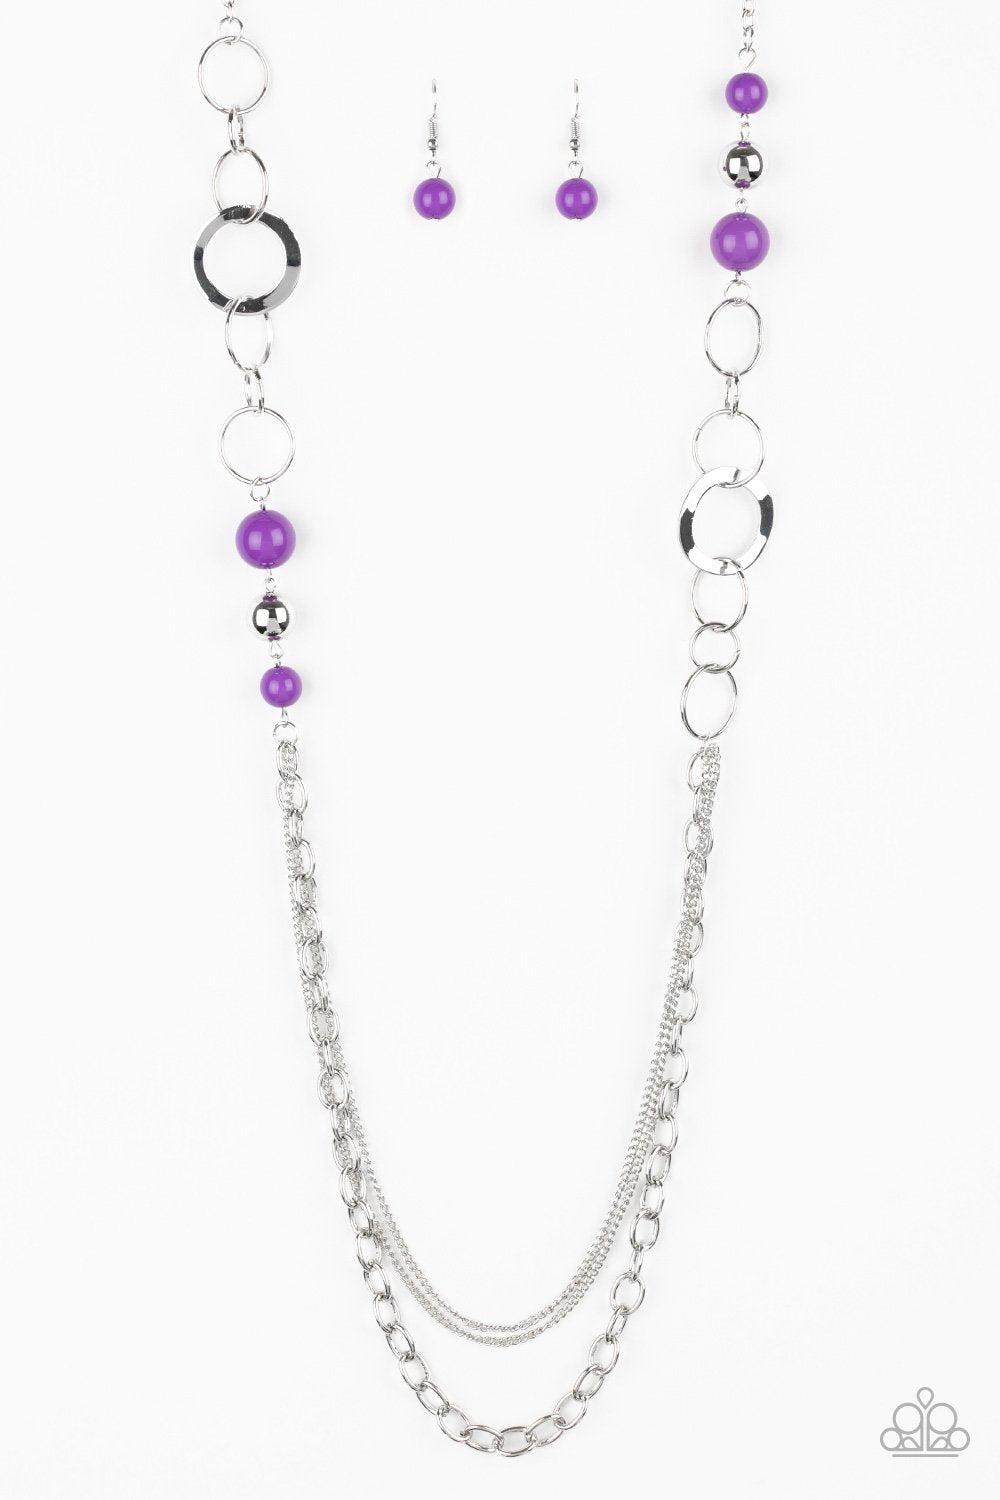 Paparazzi - Top Pop - Purple Necklace | Fashion Fabulous Jewelry